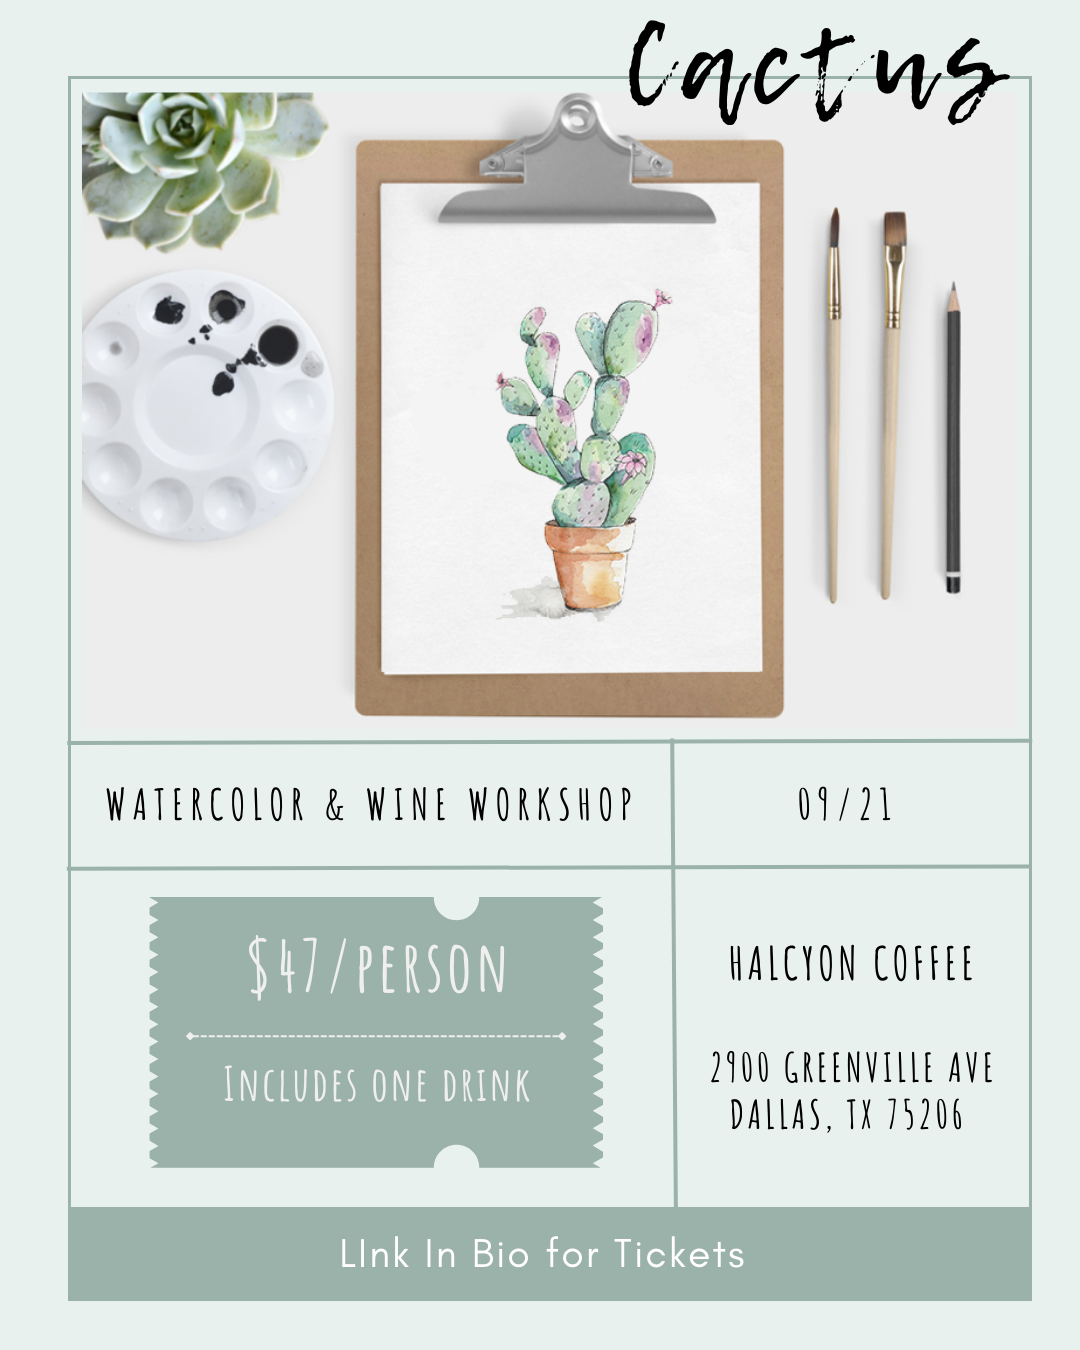 9/21 Cactus Watercolor & Wine Workshop